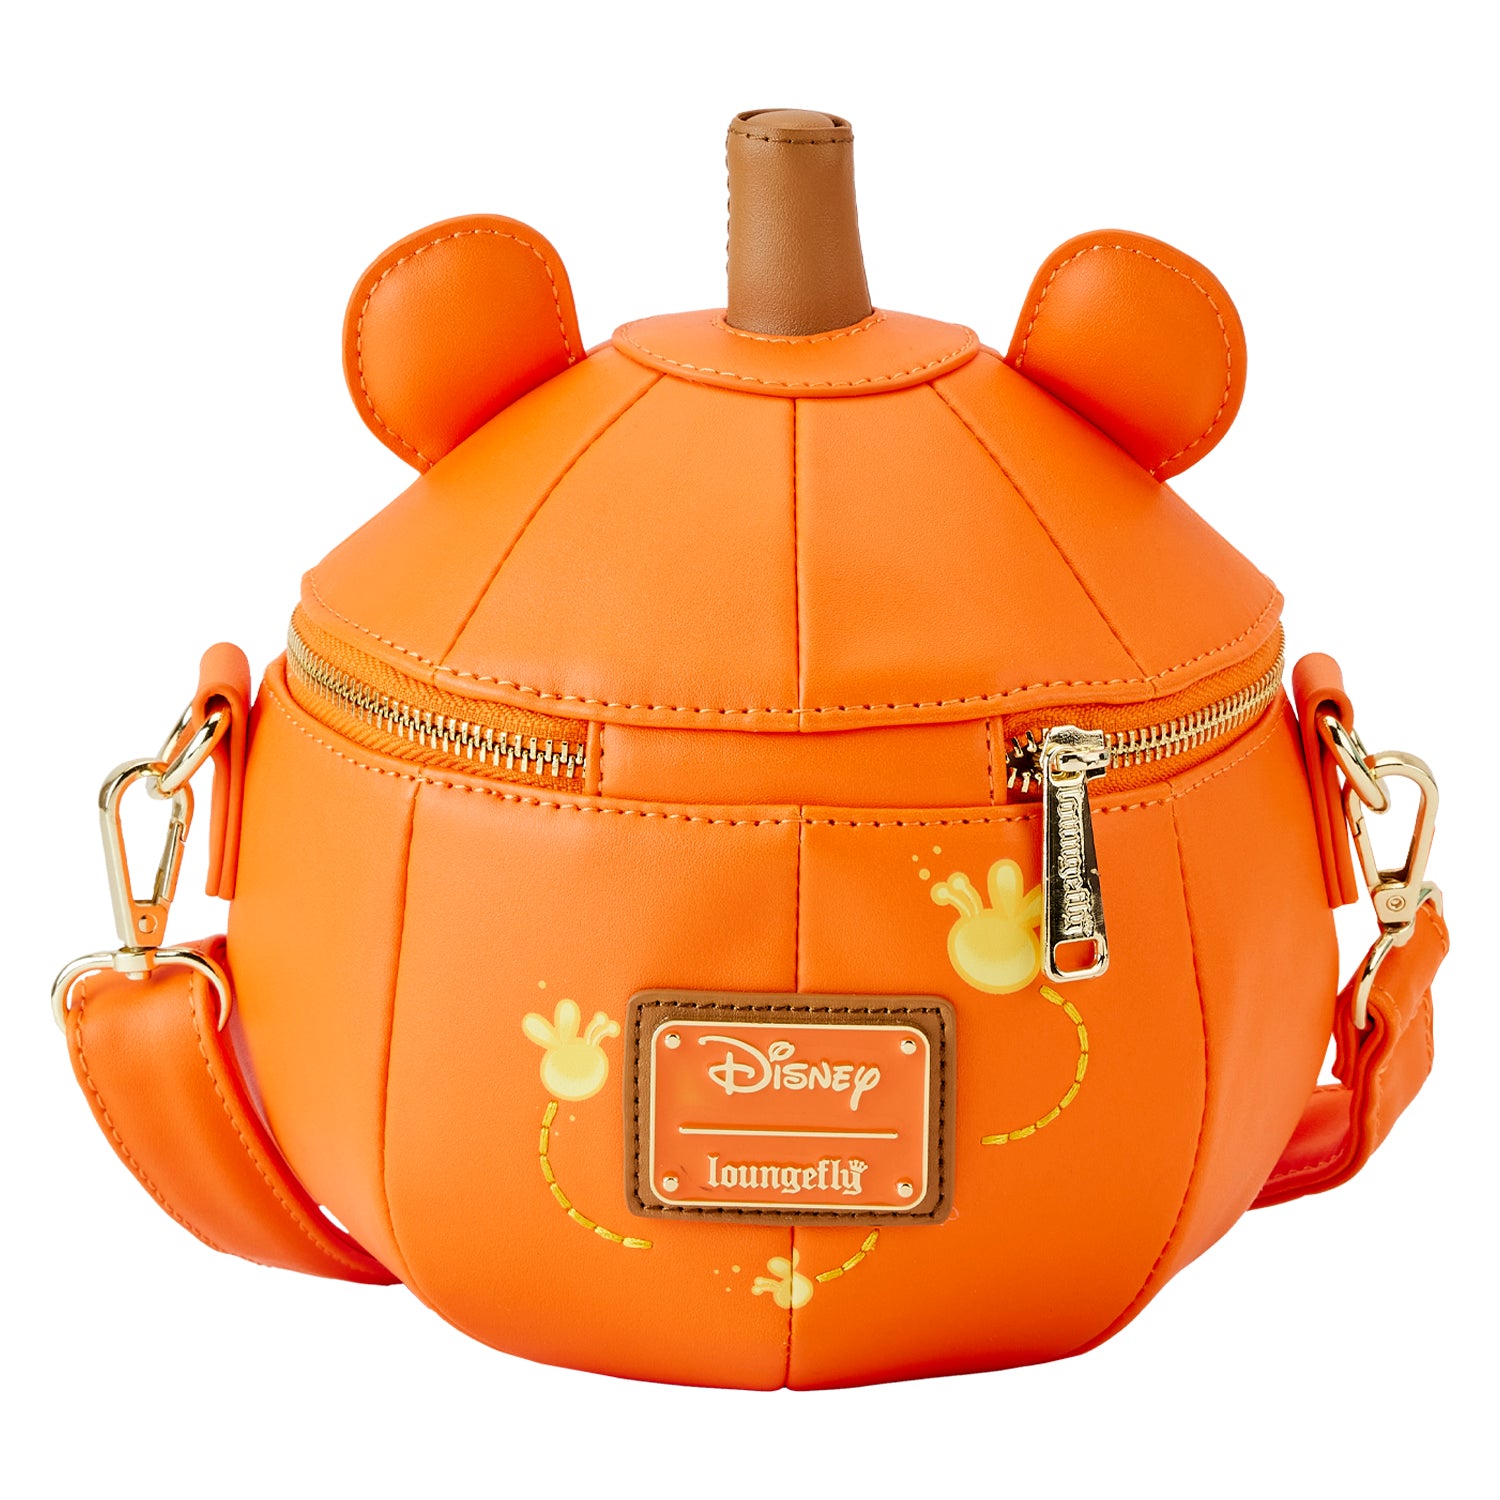 Loungefly x Disney Winnie the Pooh Pumpkin Crossbody Bag